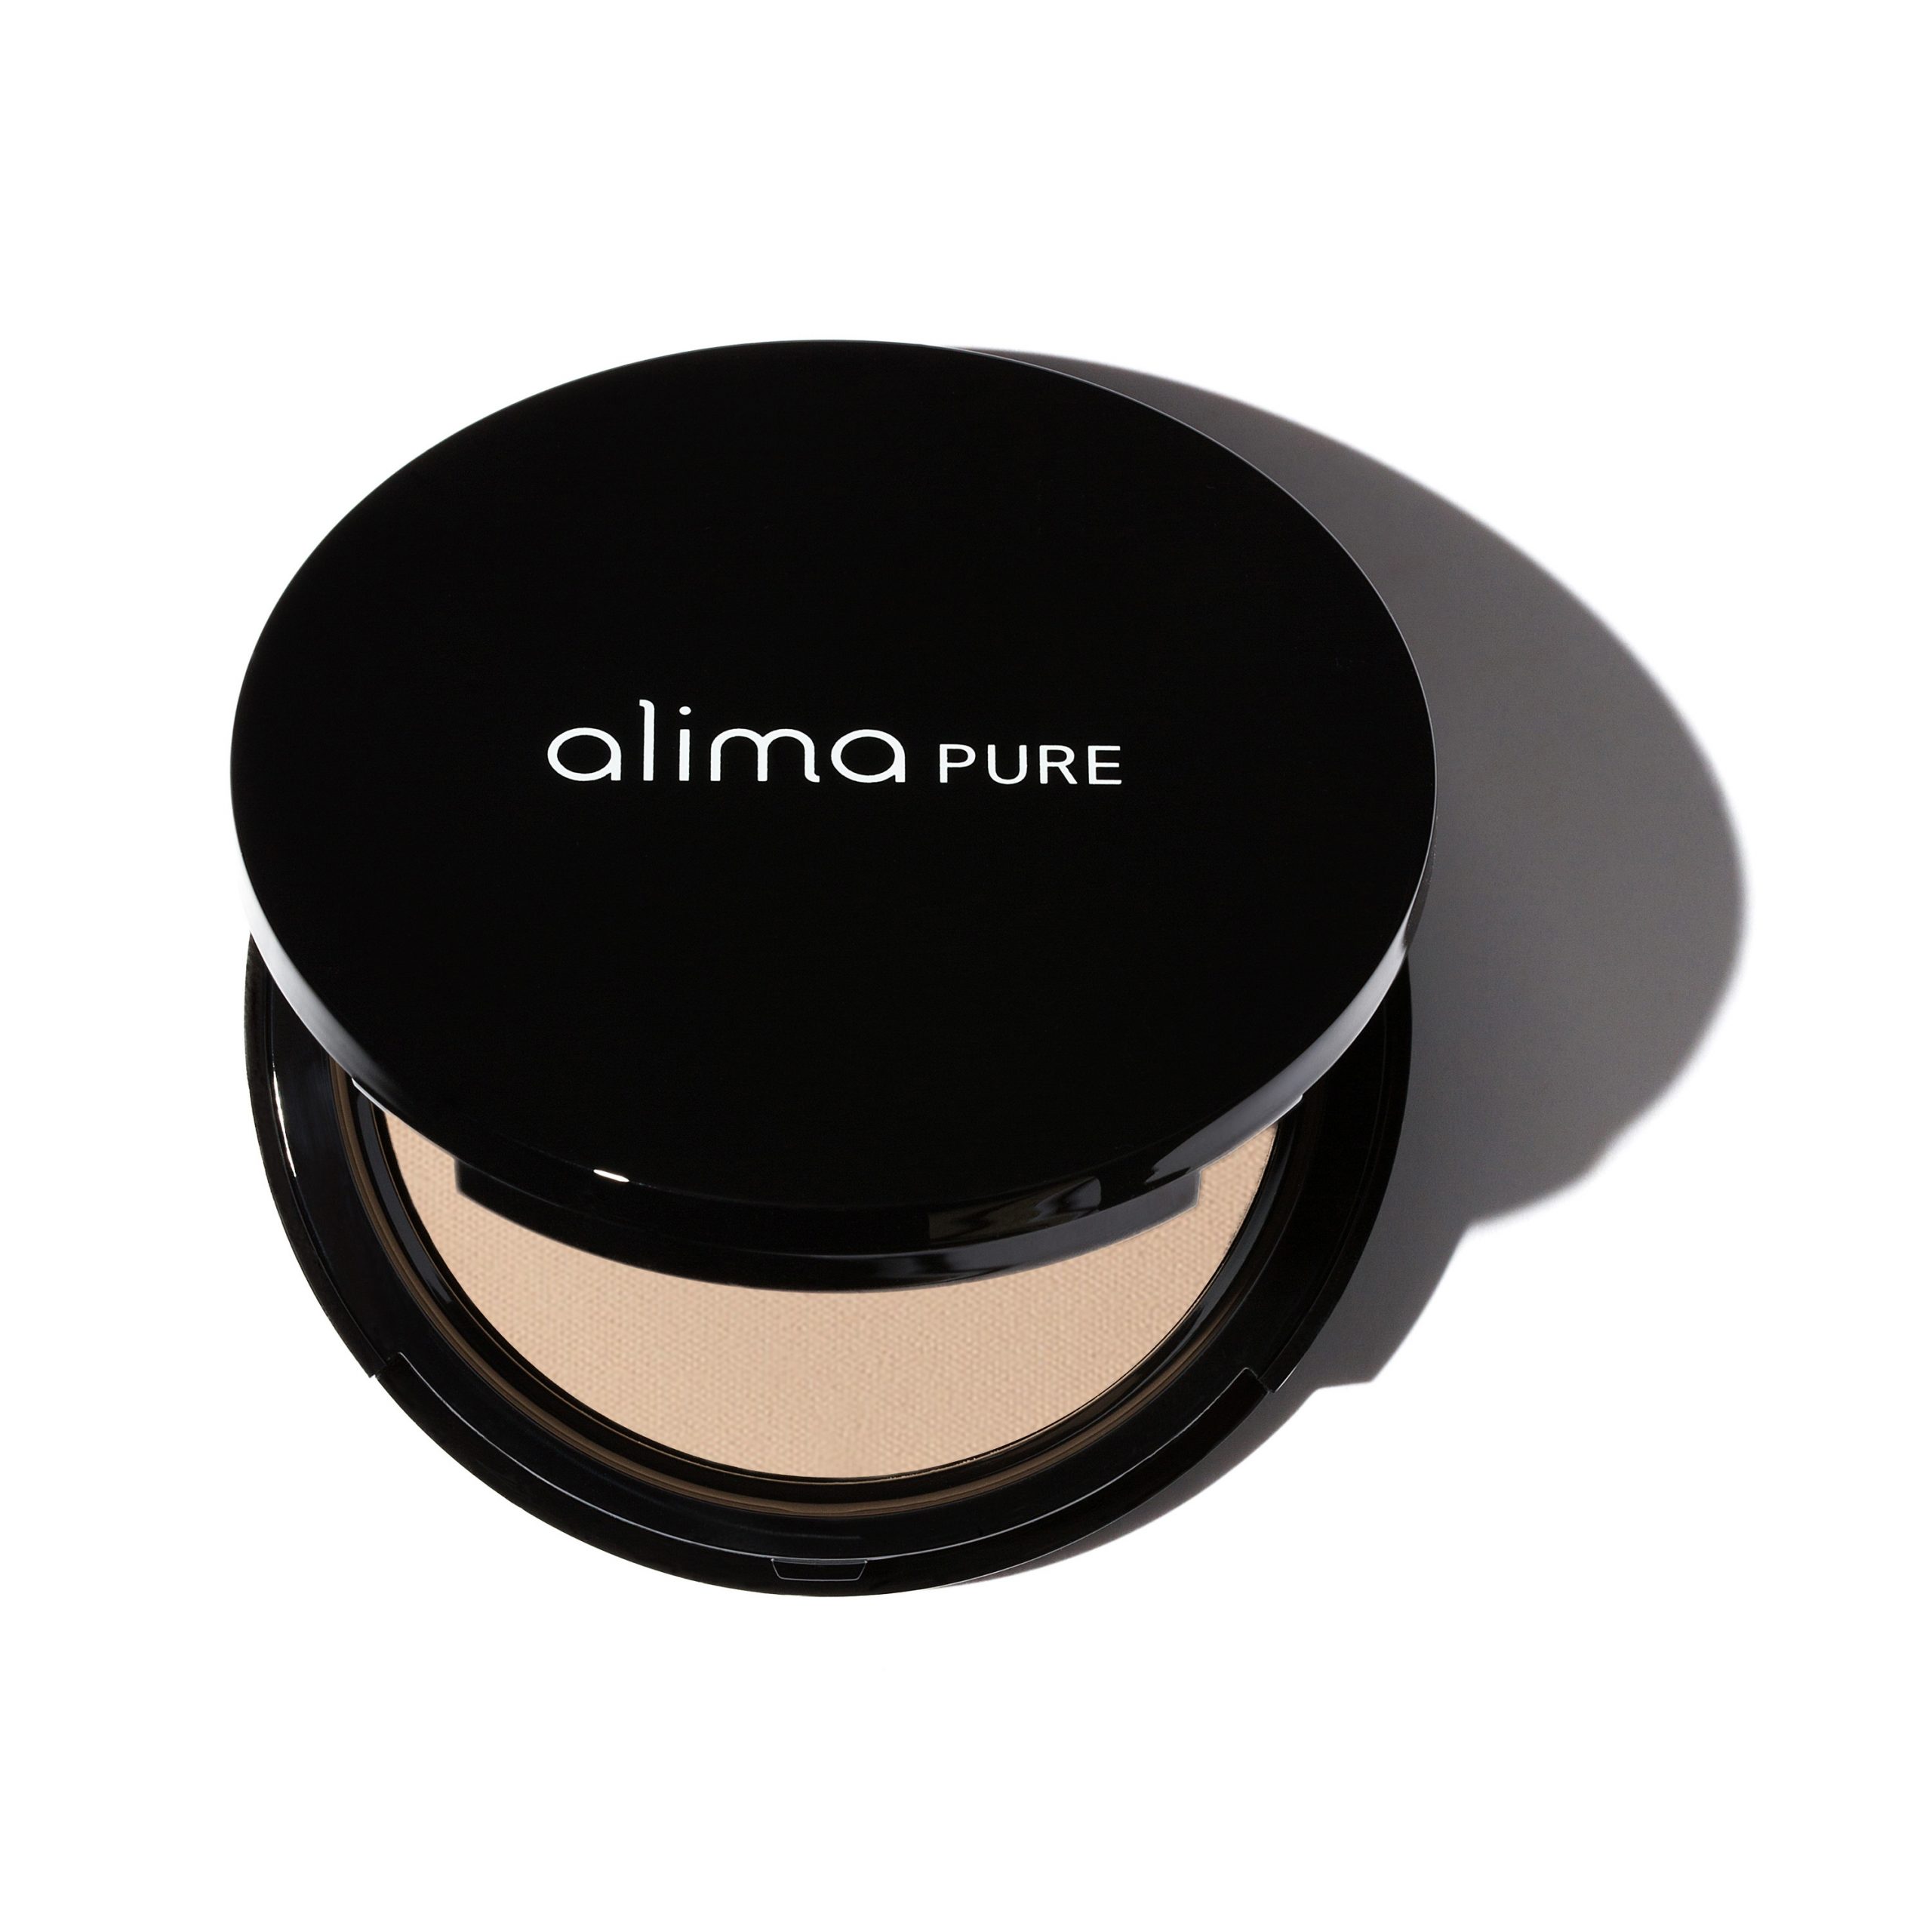 Alima Pure Loose Mineral Blush, Powder Blush Makeup, Cheek Tint